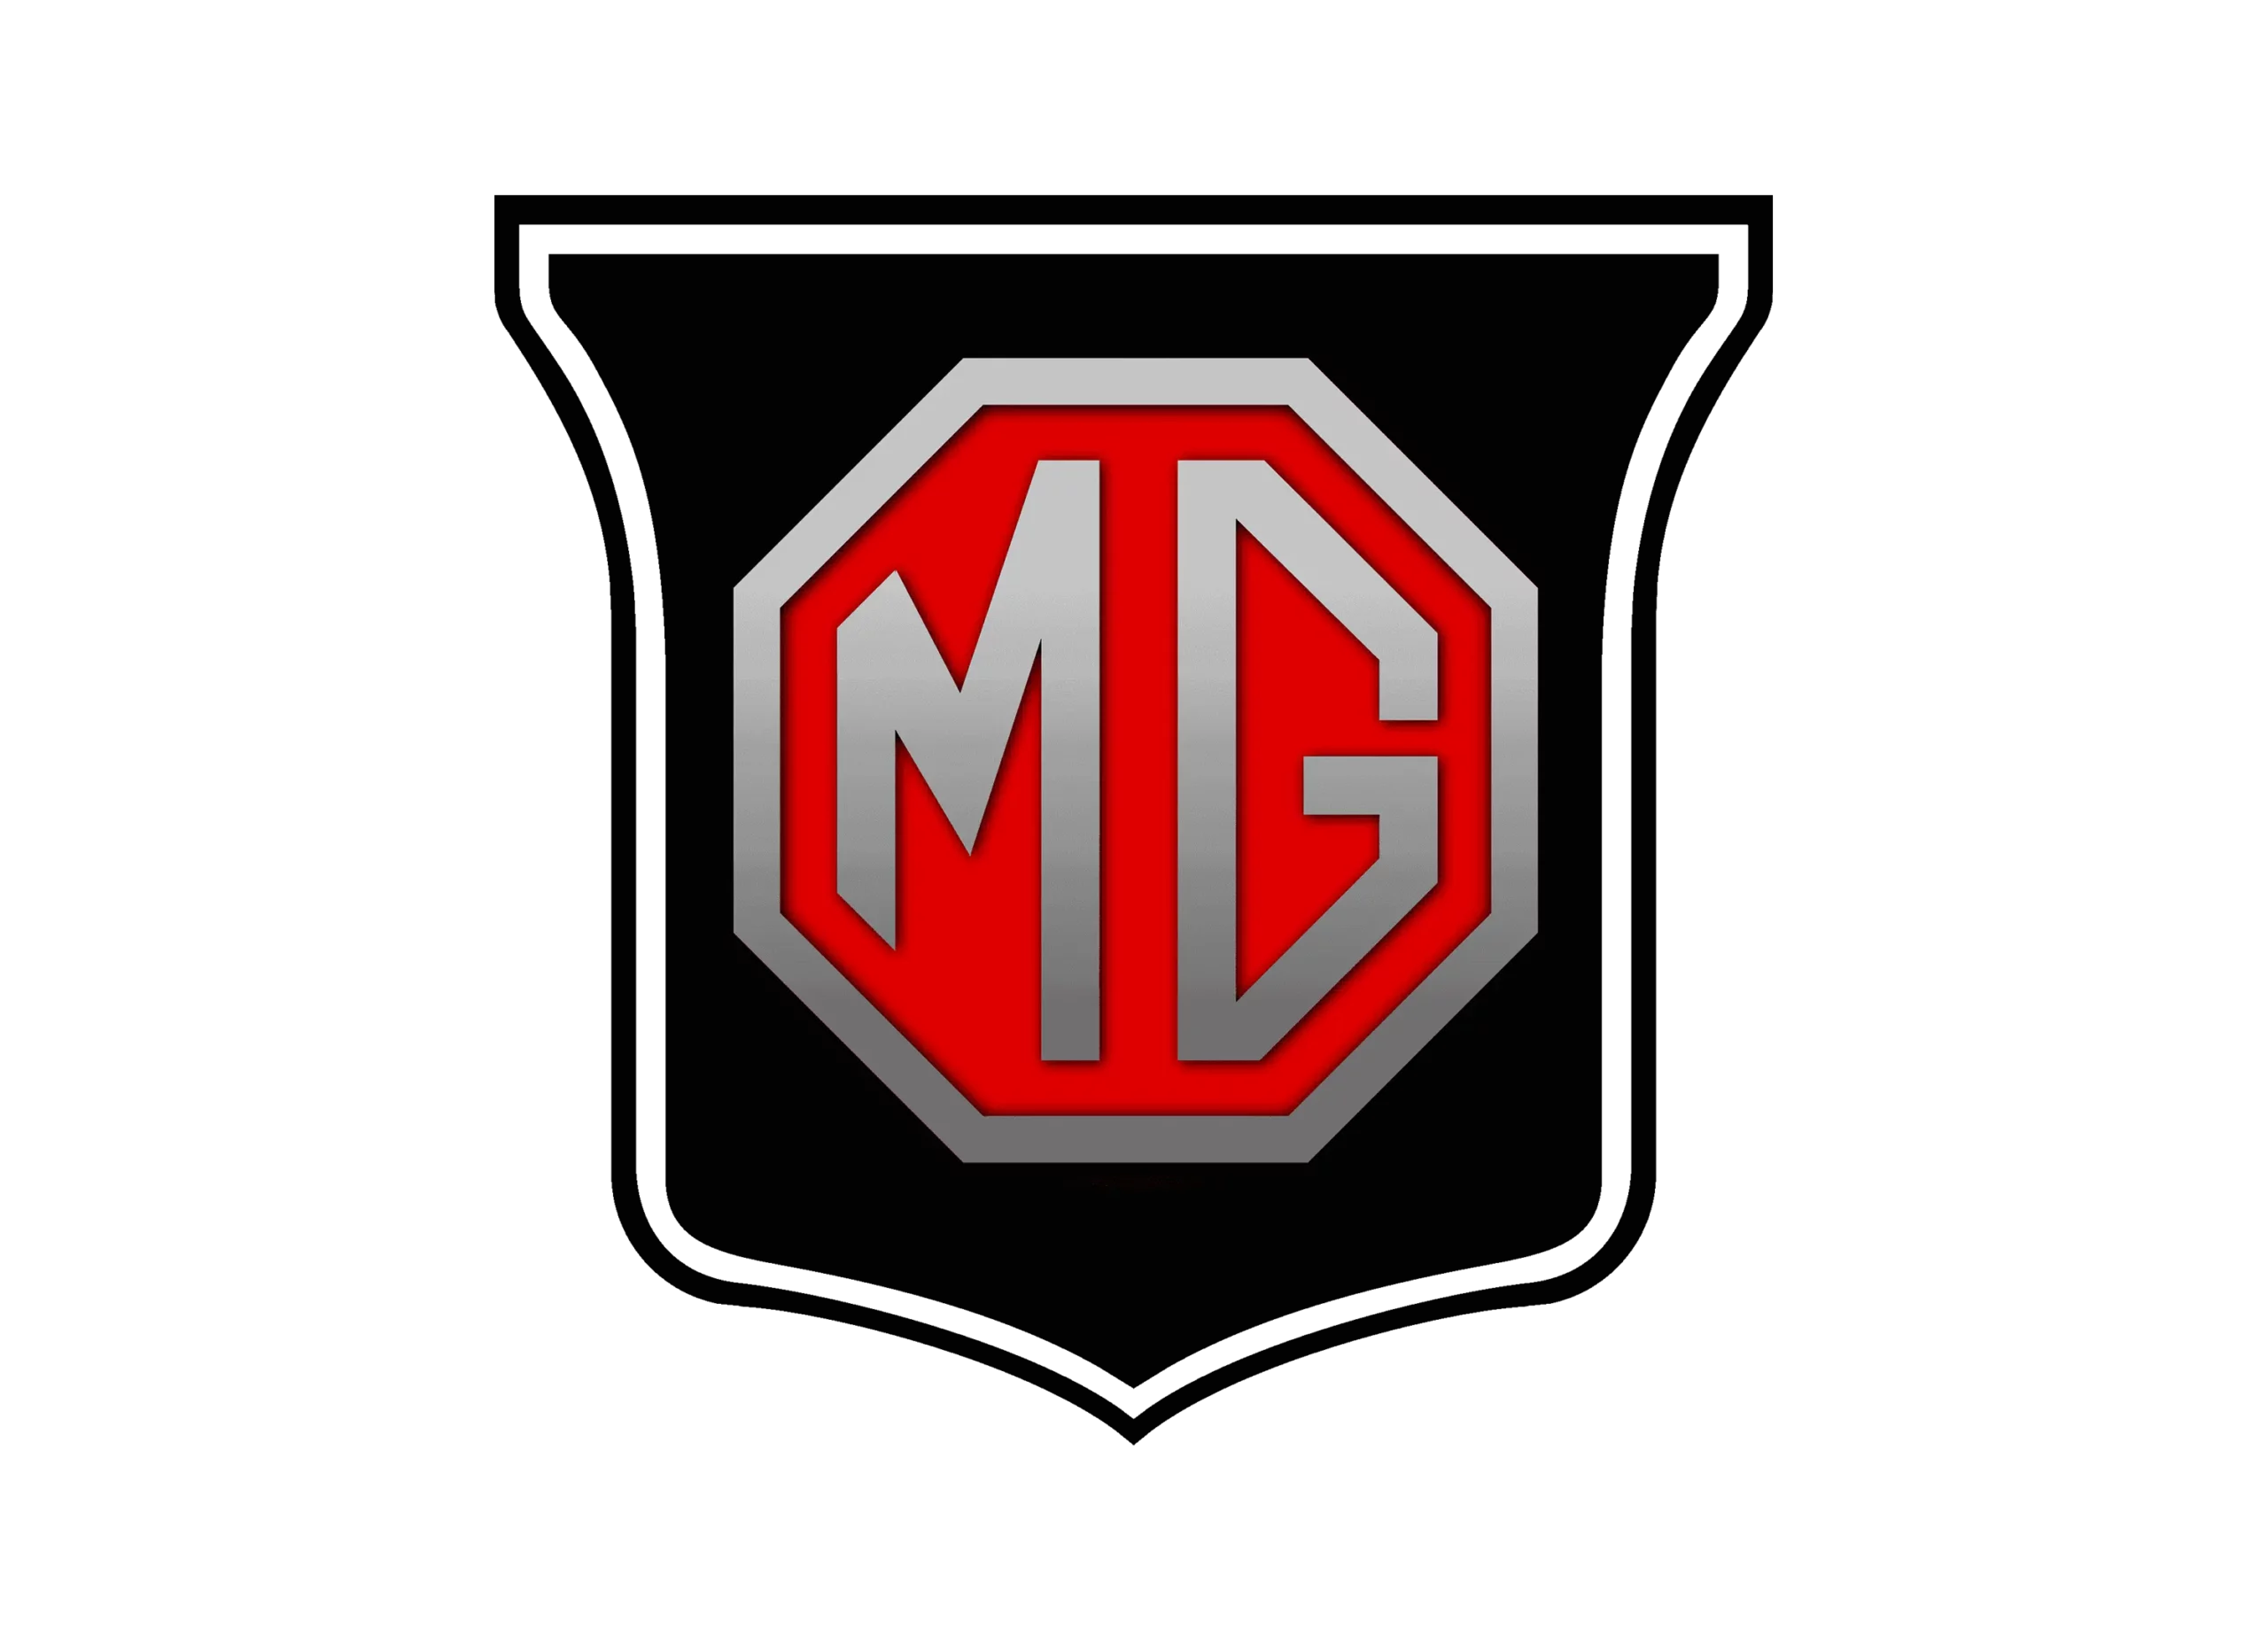 MG logo 1962-1990